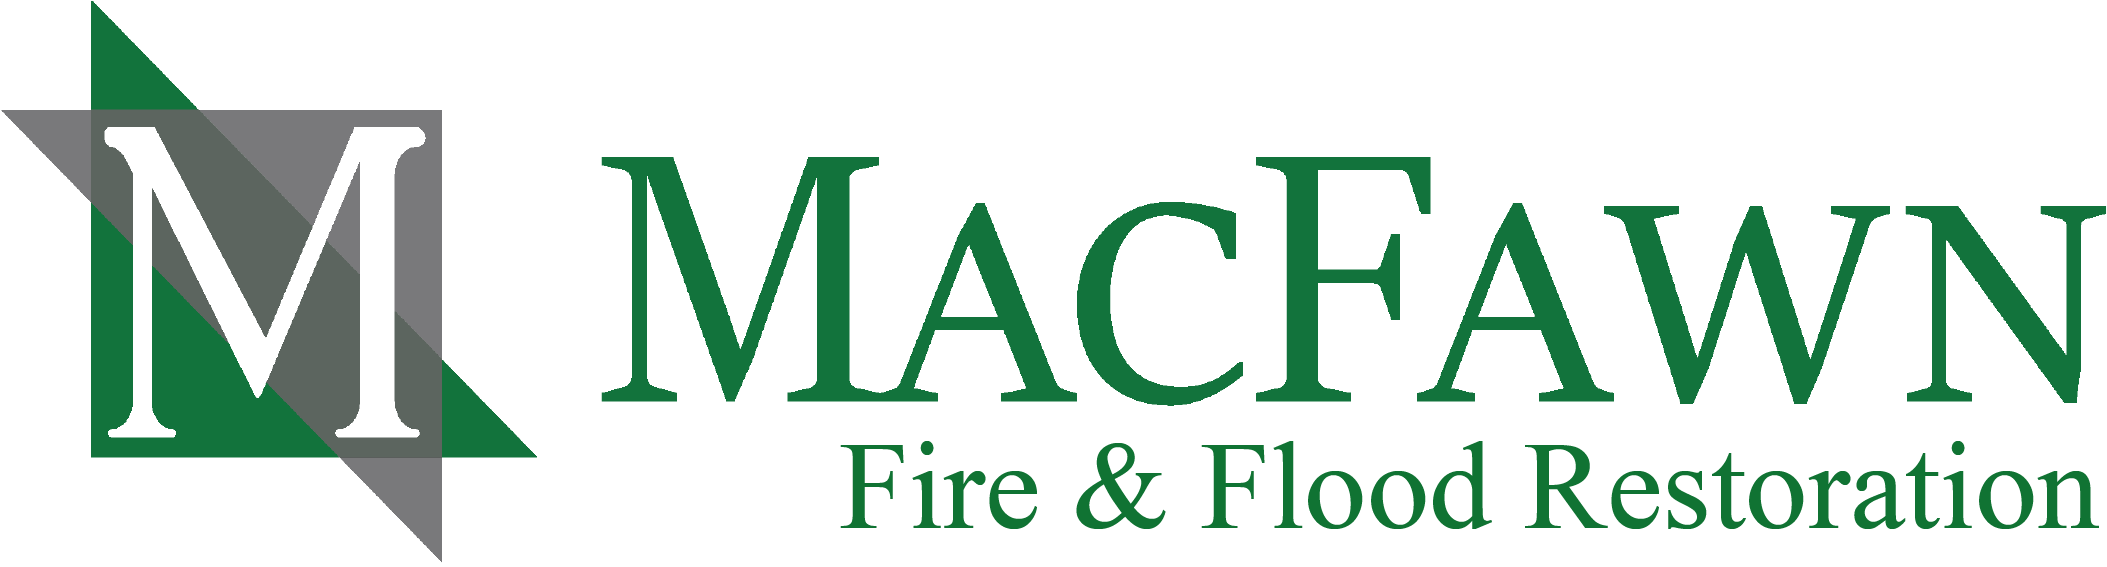 MacFawn Fire & Flood Restoration Logo